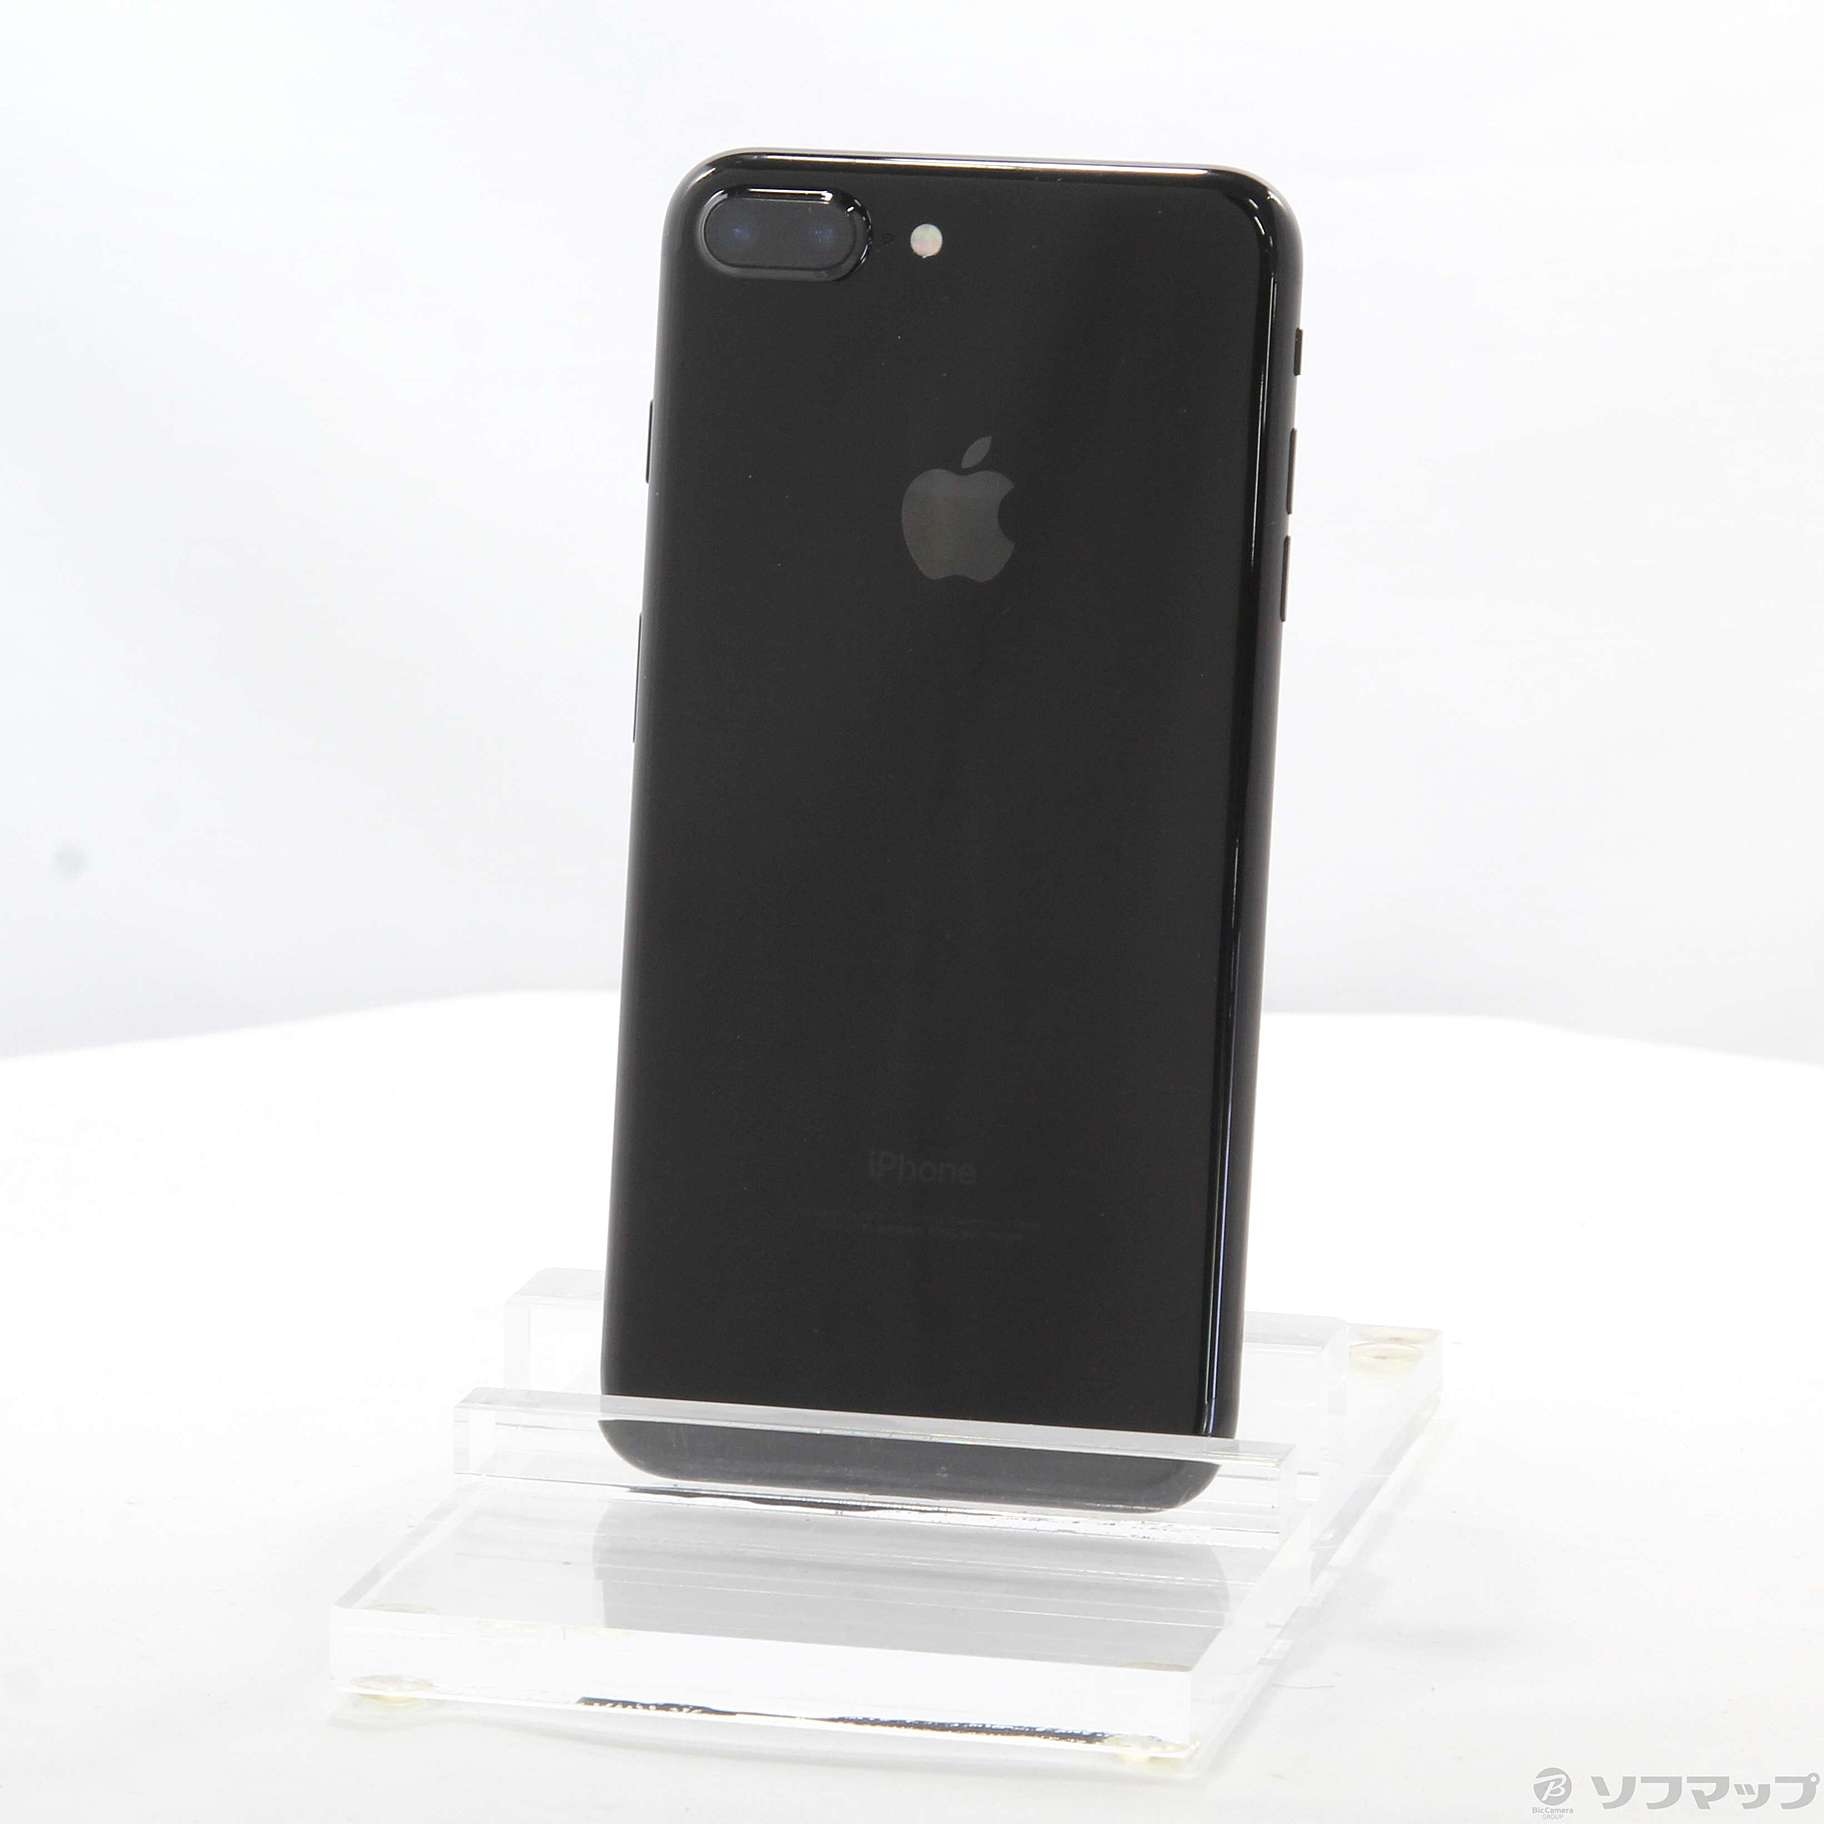 【SoftBank】iPhone7 Plus（32GB）ブラック